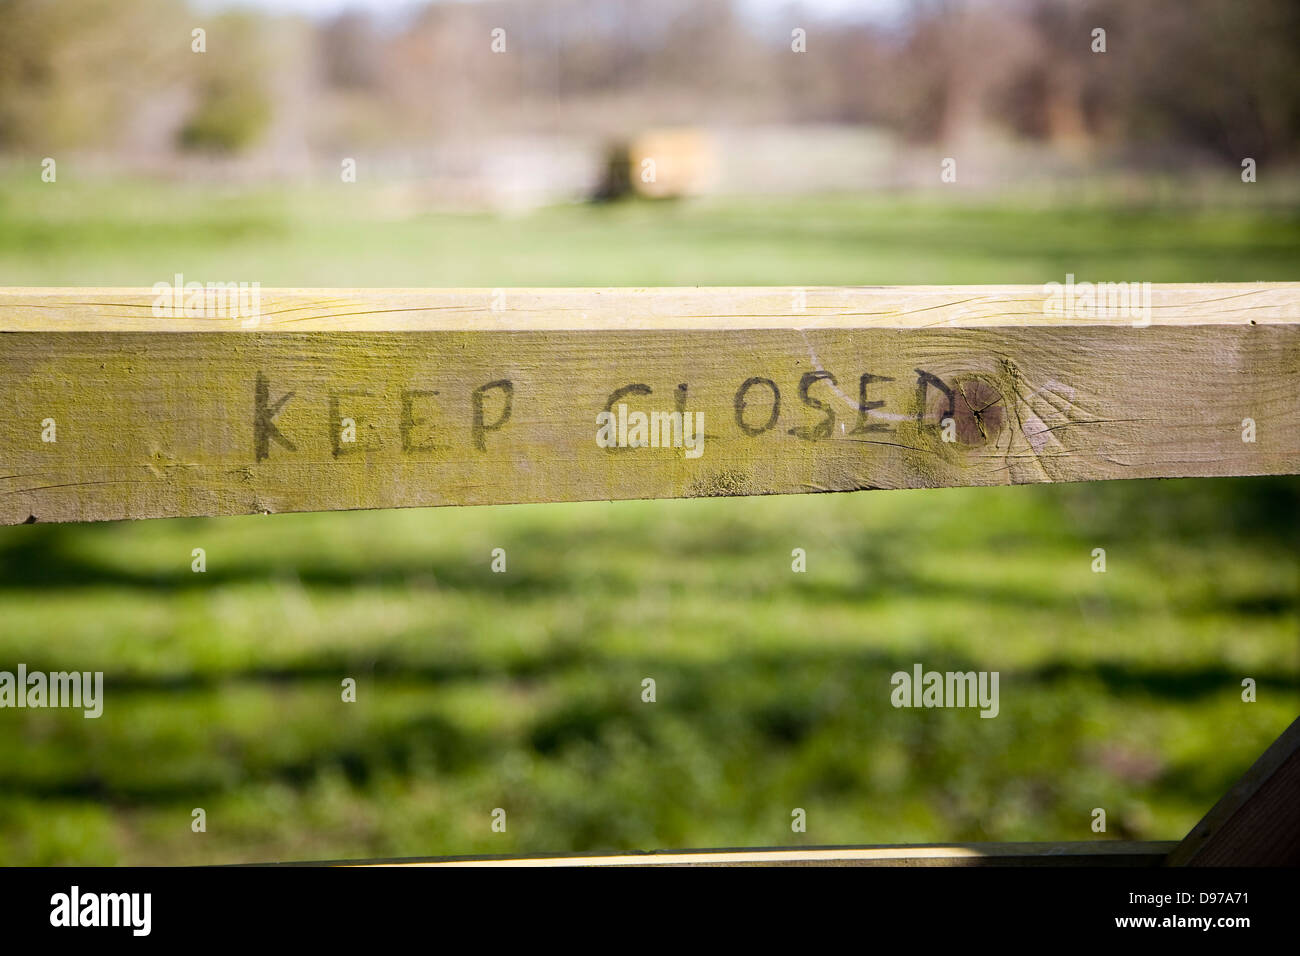 Keep closed sign on gate, UK Stock Photo